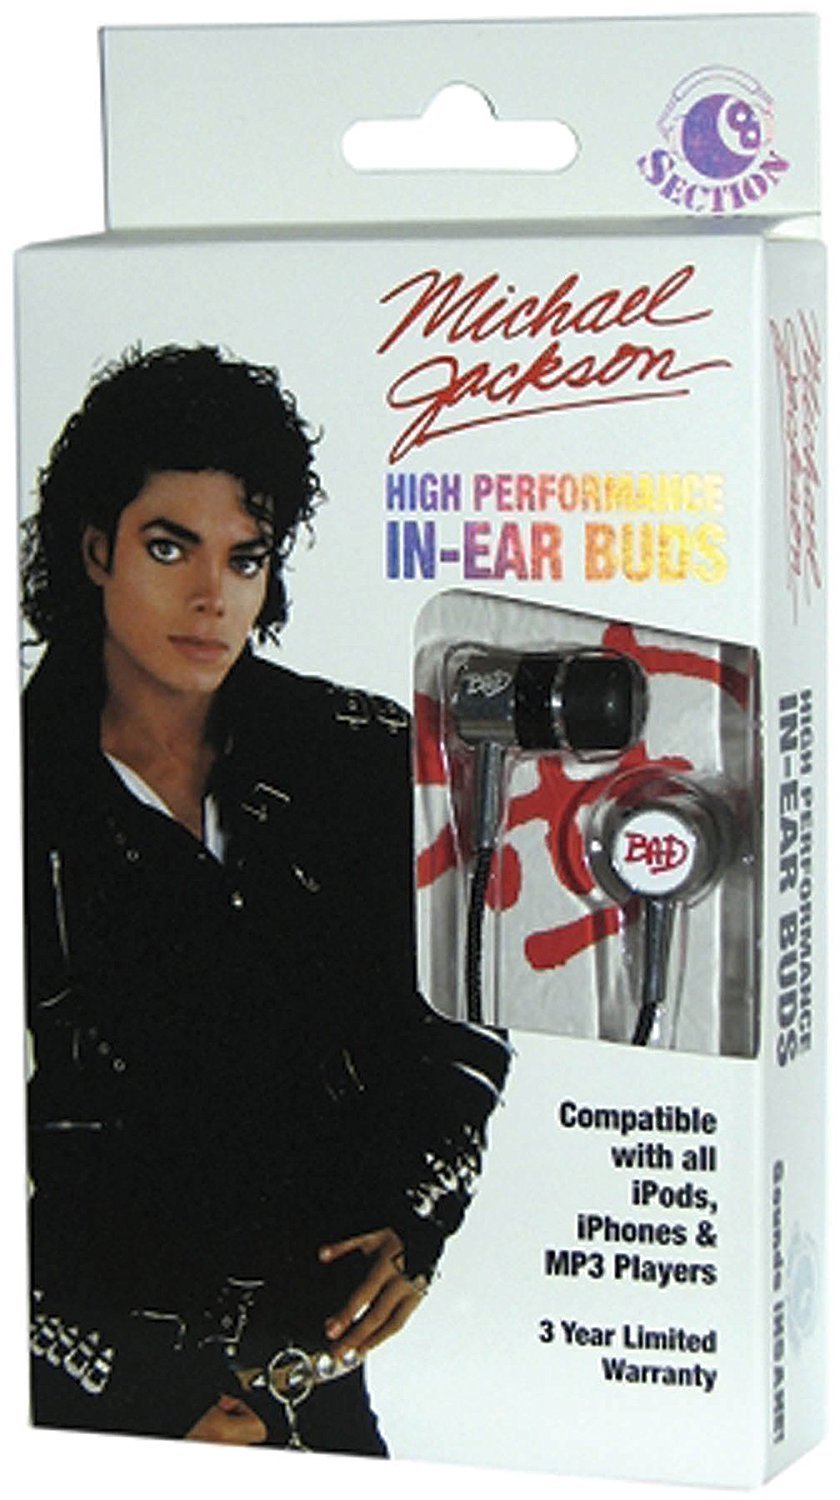 Sluchátka do uší Section8 rbw-5086 Michael Jackson Bad Earbuds Headphones - Black